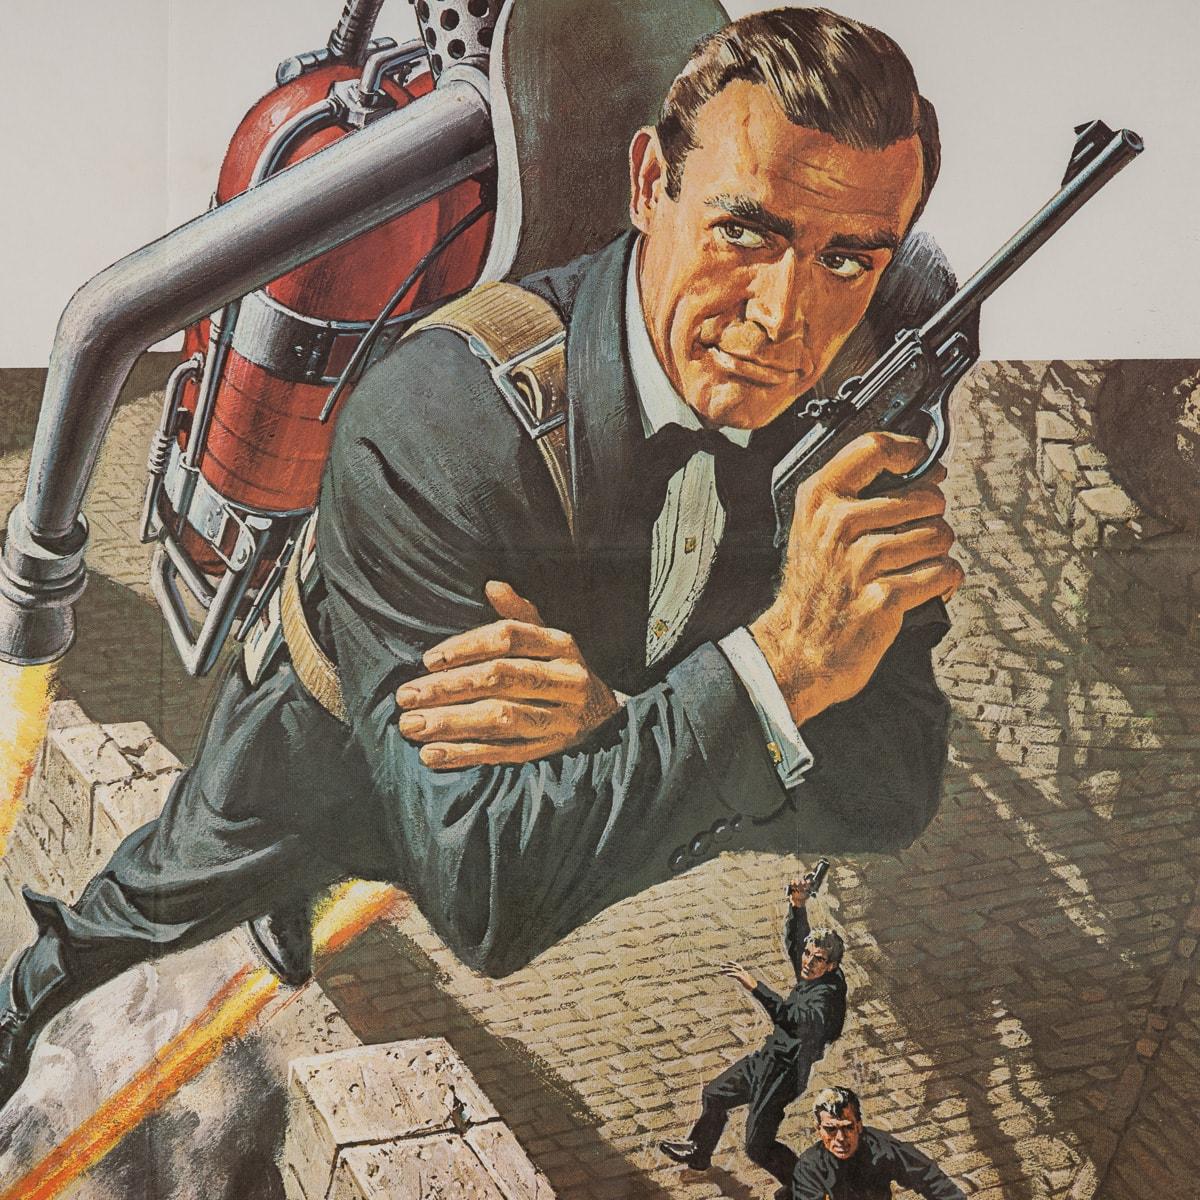 Original U.S James Bond 007 'Thunderball' Poster c.1965 In Good Condition For Sale In Royal Tunbridge Wells, Kent